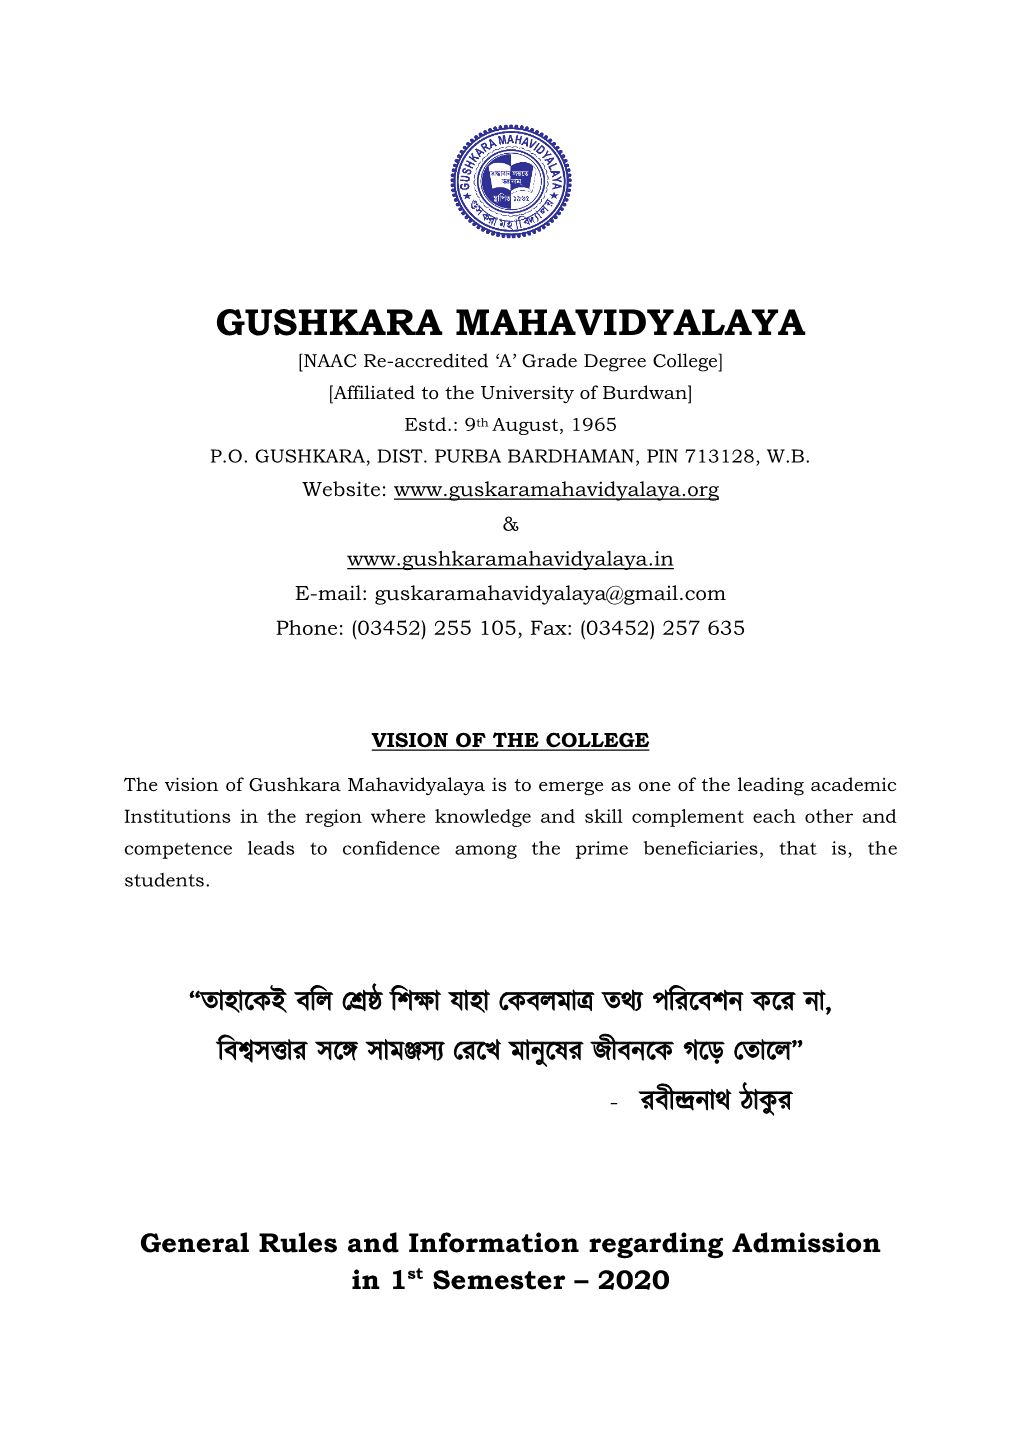 GUSHKARA MAHAVIDYALAYA [NAAC Re-Accredited ‘A’ Grade Degree College] [Affiliated to the University of Burdwan] Estd.: 9Th August, 1965 P.O